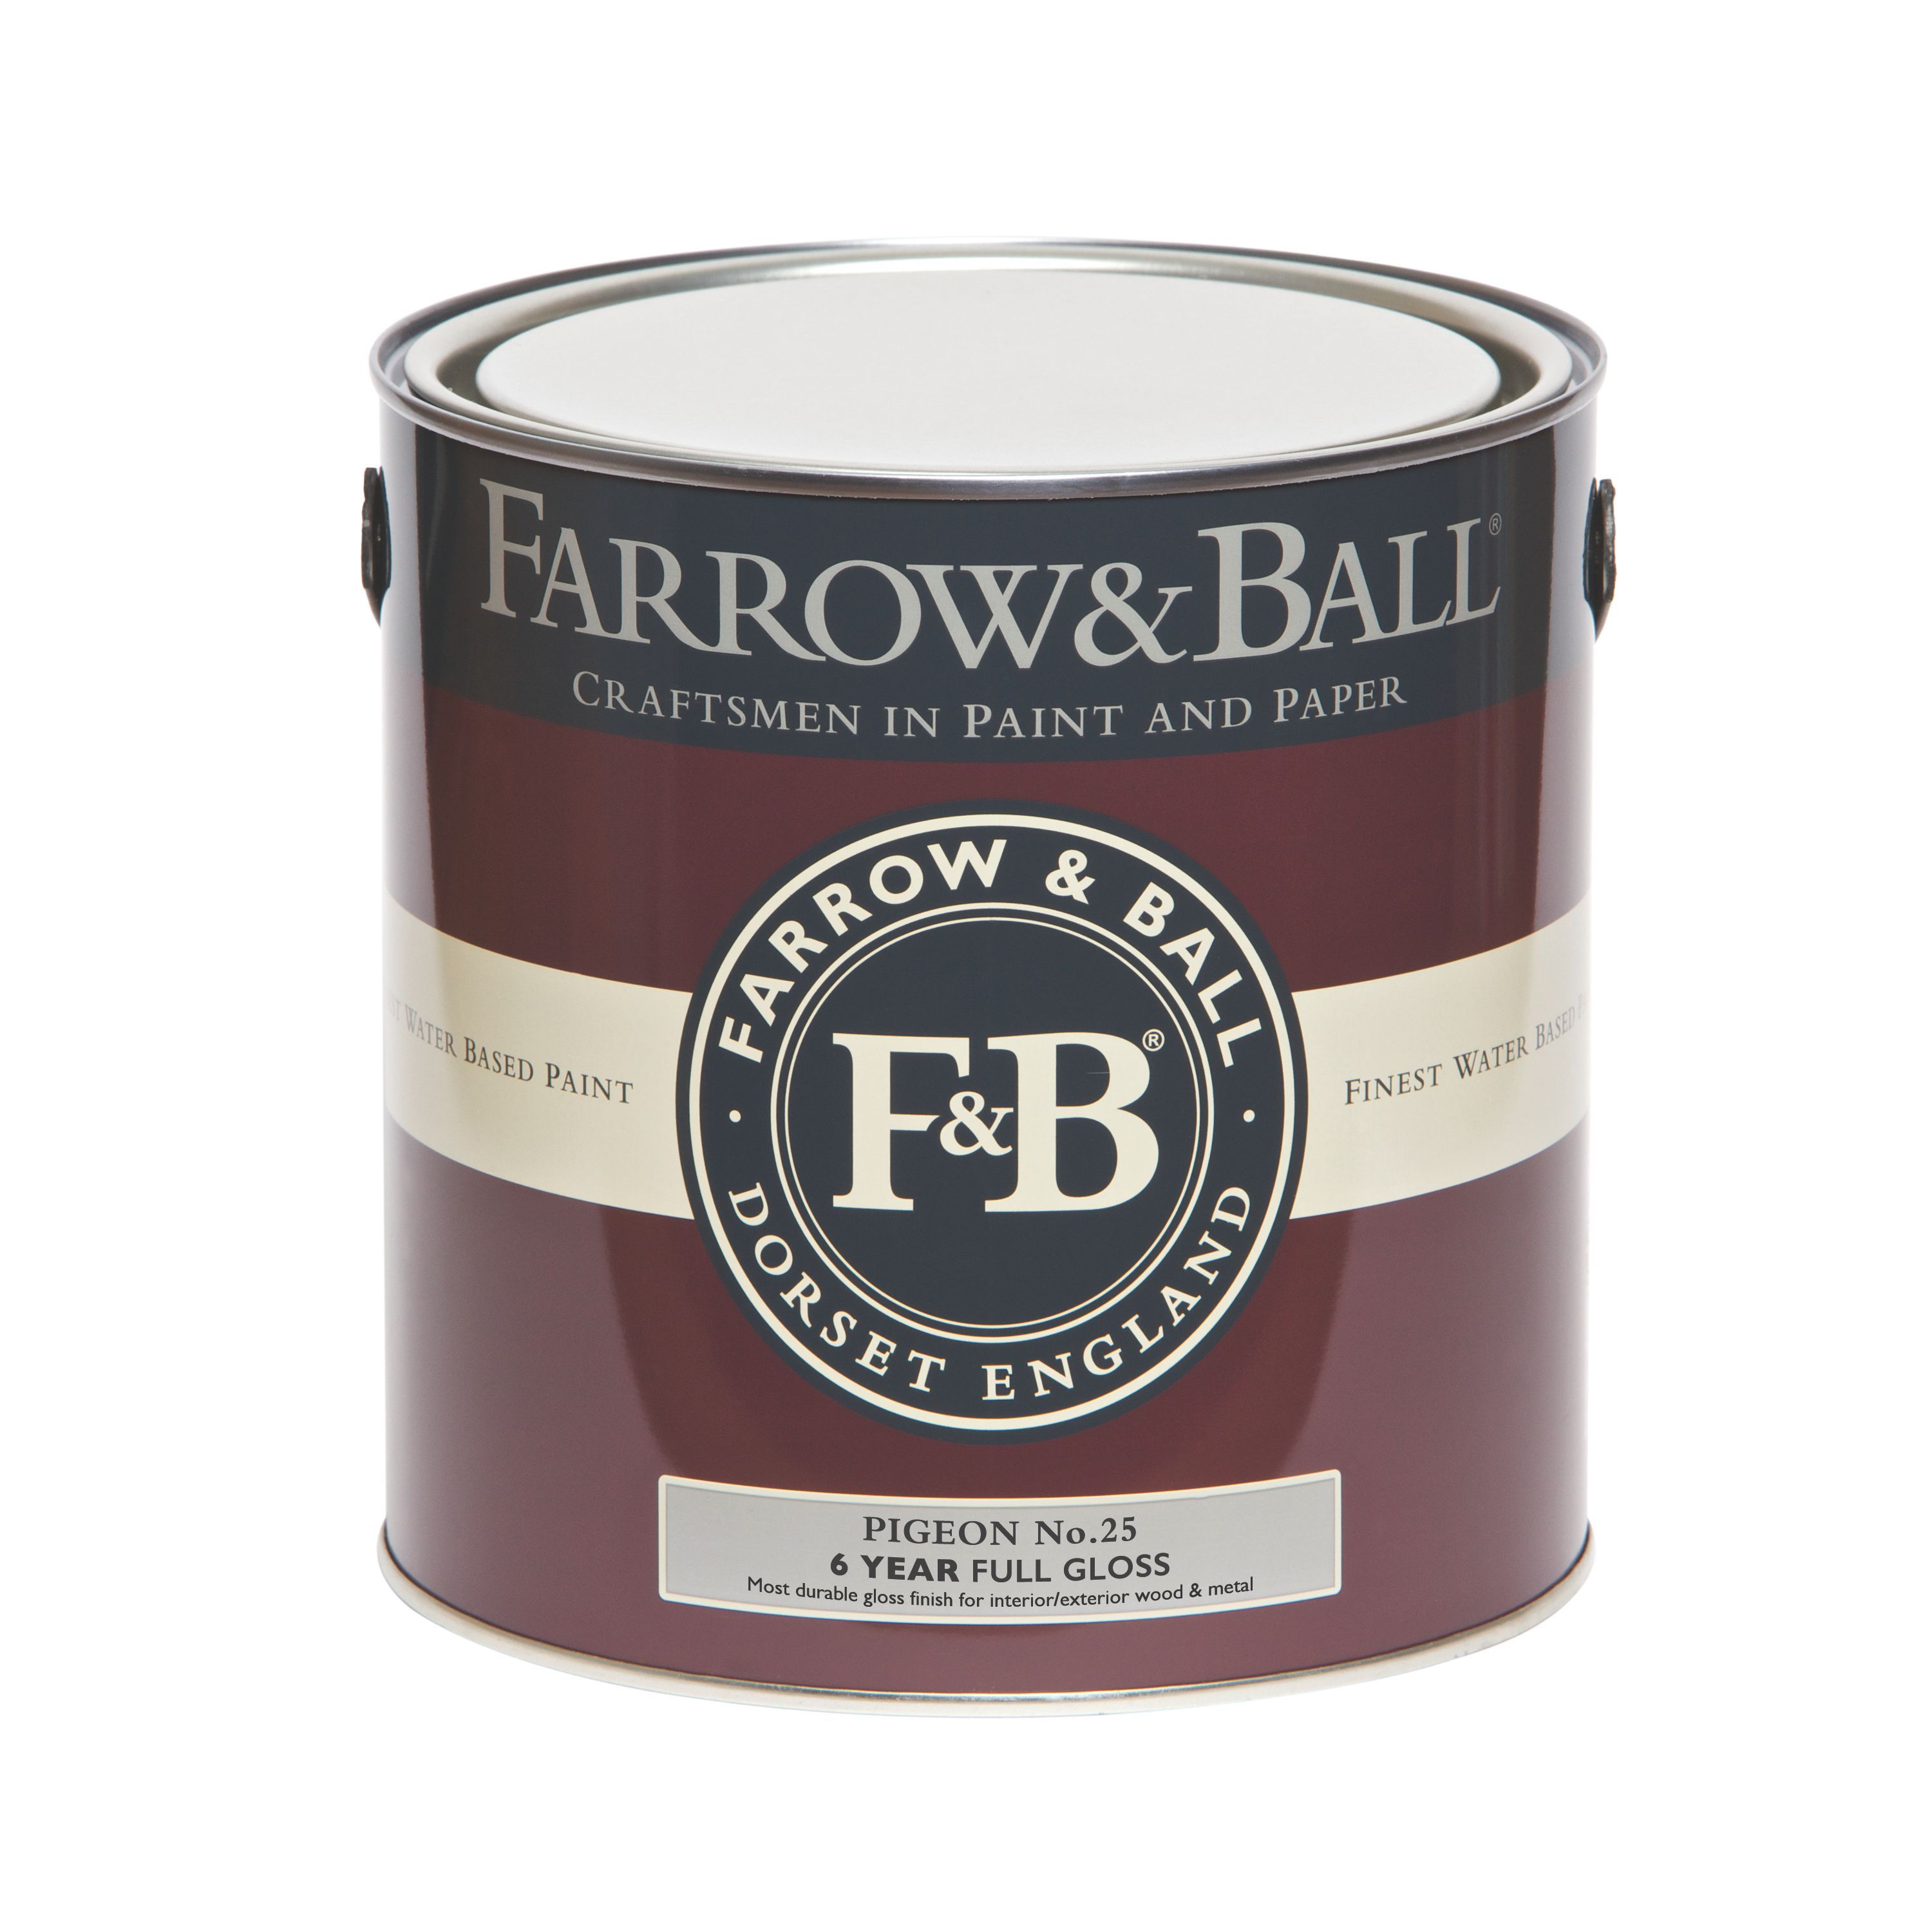 Farrow & Ball Pigeon No.25 Gloss Metal & wood paint, 2.5L